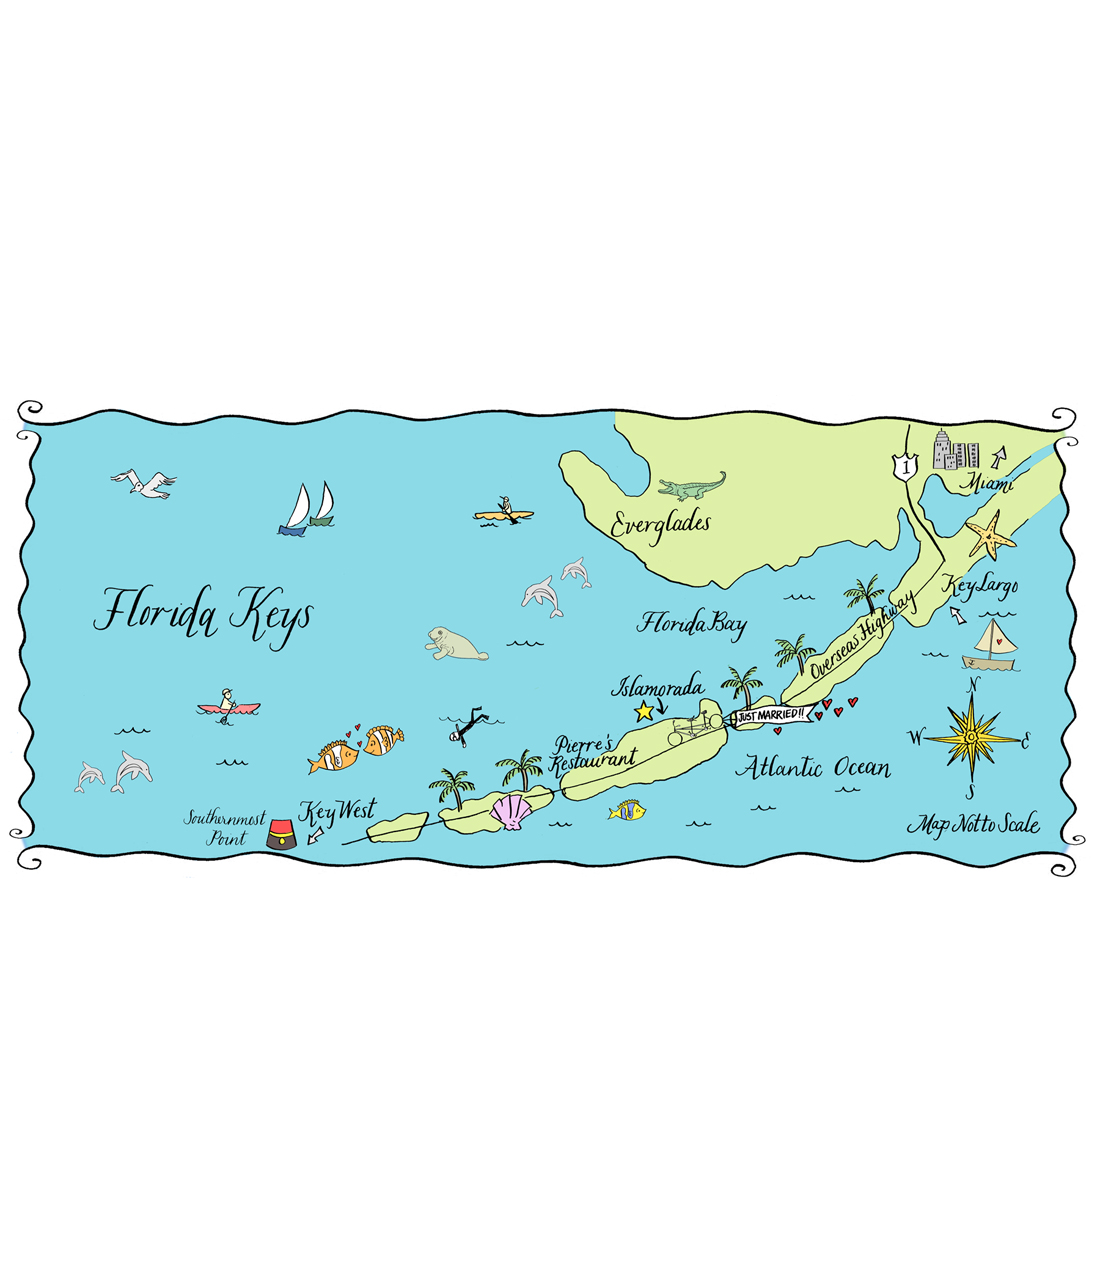 Florida Map Drawing at GetDrawings Free download